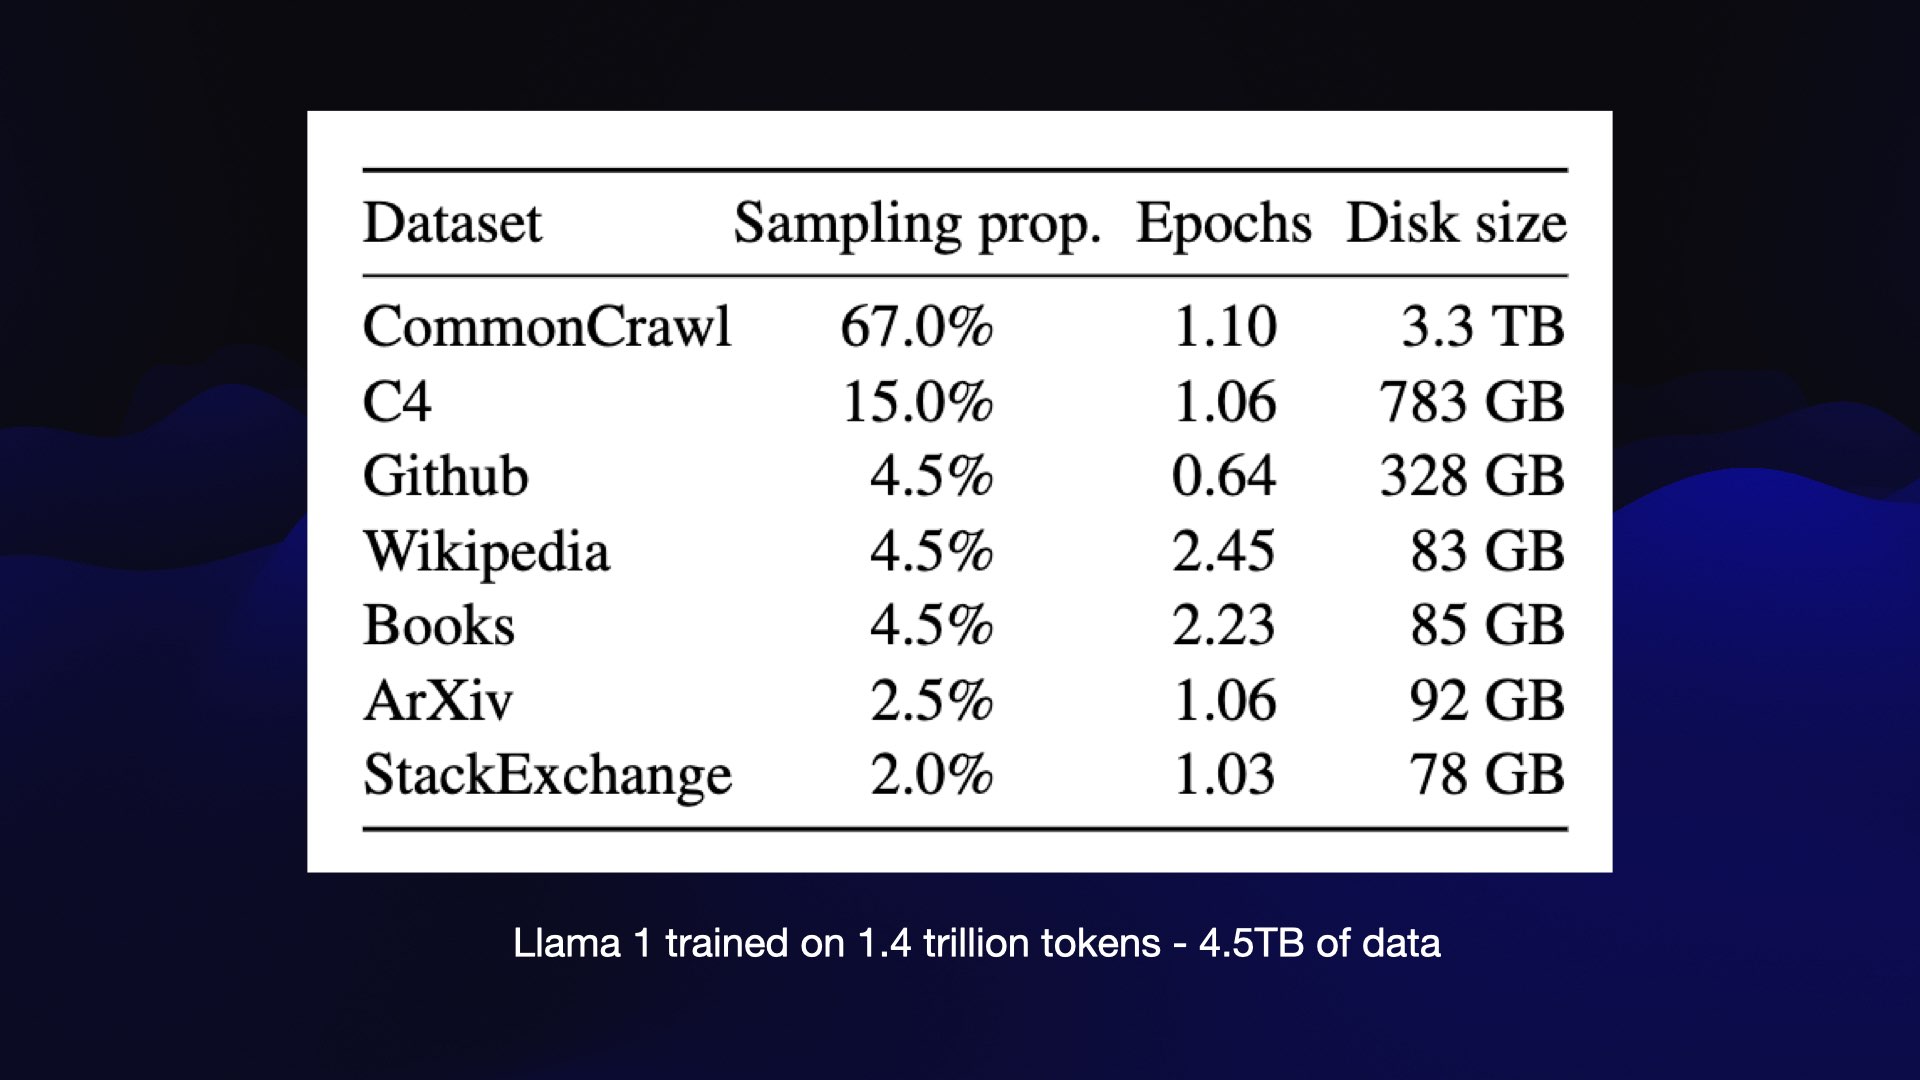 Table showing the training data for Llama 1, trained on 1.4 trillion tokens - 4.5TB of data  CommonCrawl - 67.0% - 33TB C4 - 15.0% - 783 GB Github - 4.5% - 328 GB Wikipedia - 4.5% - 83 GB Books - 4.5% - 85 GB ArXiv - 2.5% - 92 GB StackExchange - 2.0% - 78 GB  